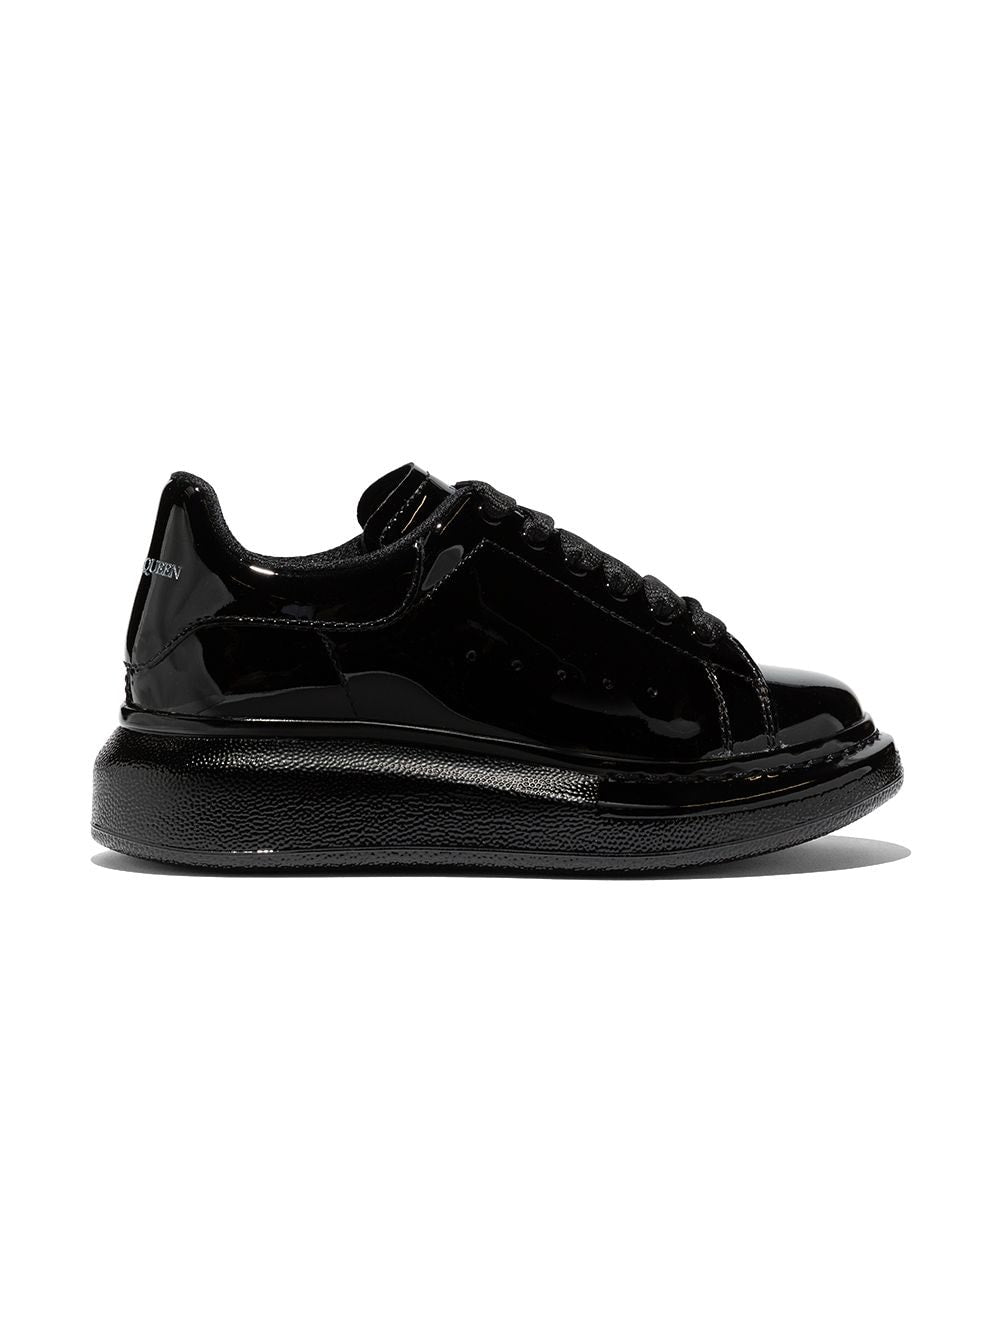 ALEXANDER MCQUEEN KIDS Oversized Sole Sneakers Gloss Black - MAISONDEFASHION.COM